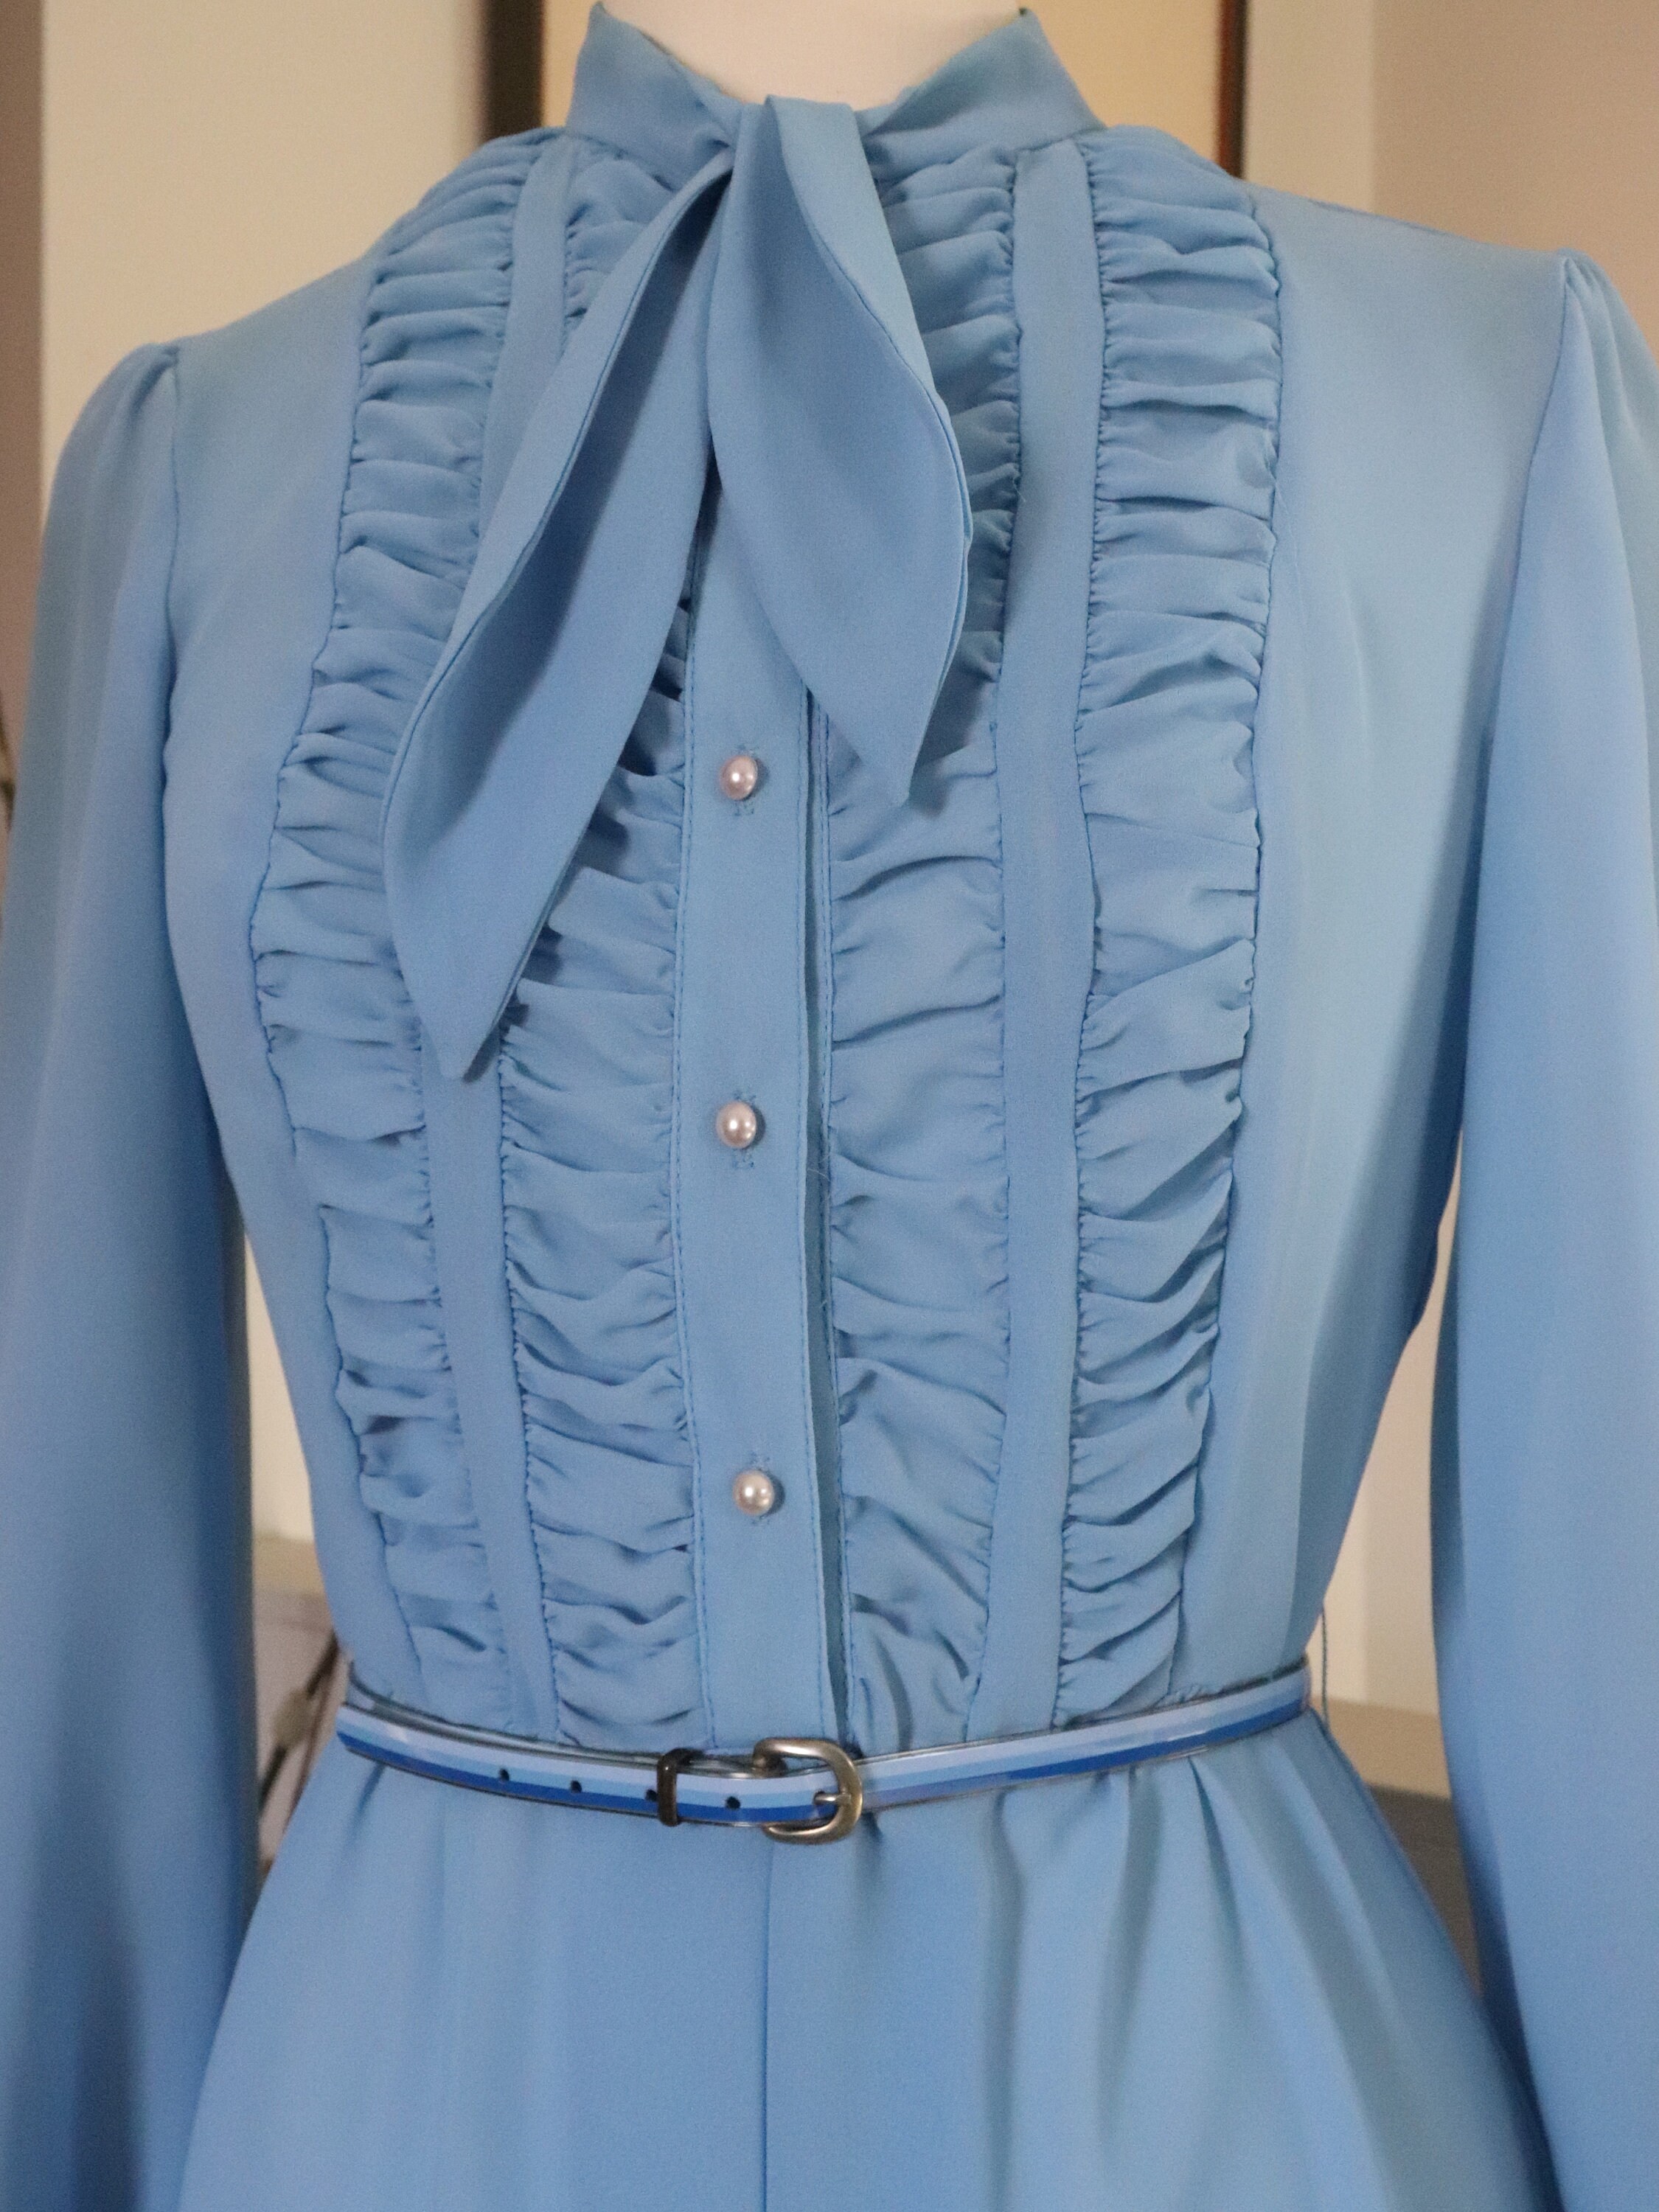 Spring Light Blue Belted Dress Vintage Sheer Chiffon Button Up n Bowtie Dress 1980's Soft Blue Ruffled Tuxedo Dress